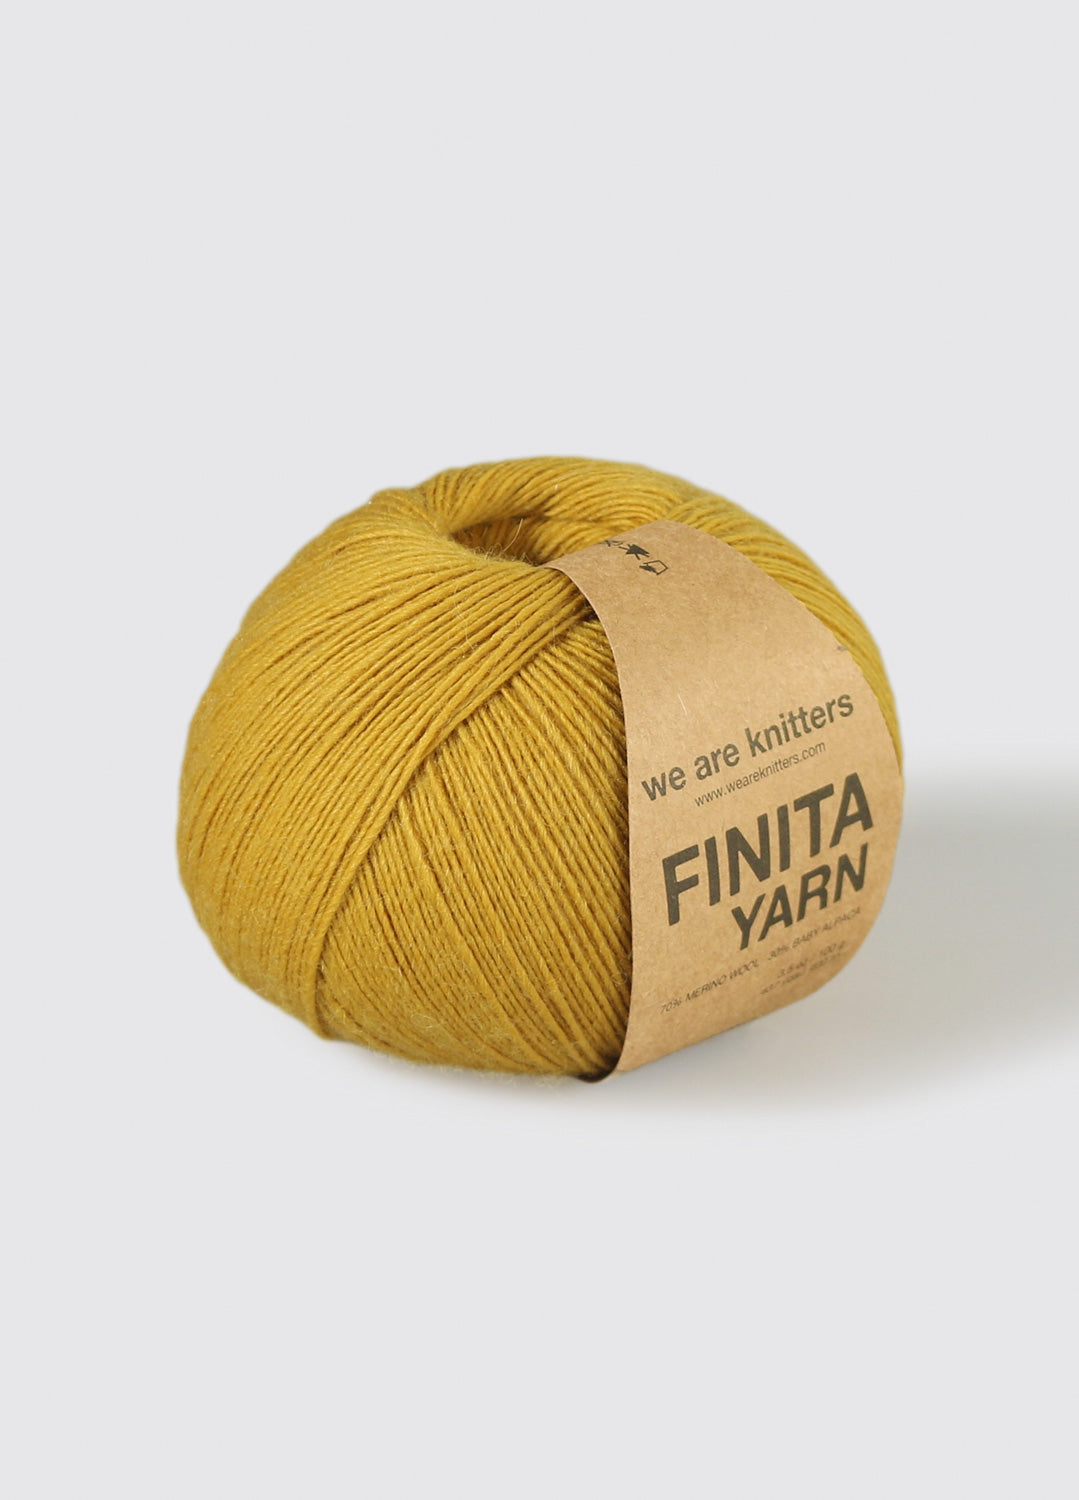 5 Pack of Finita Yarn Balls